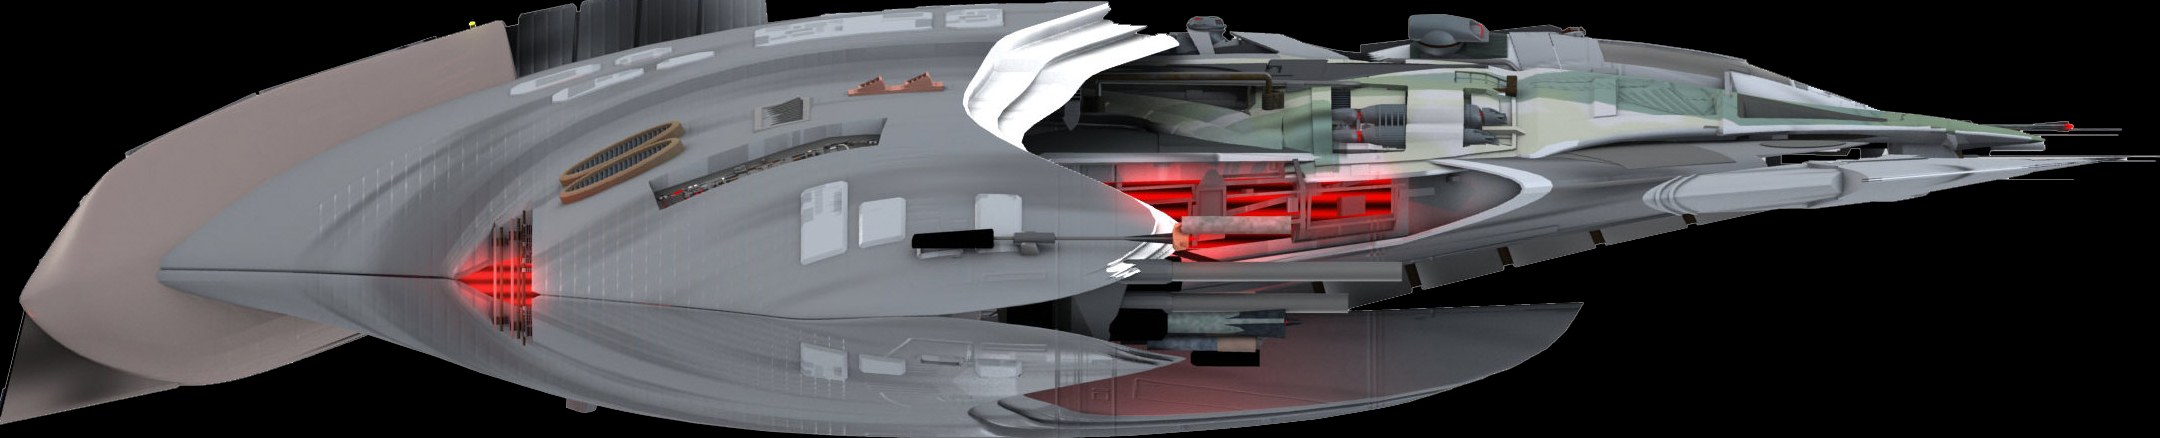 Ledosian Warship